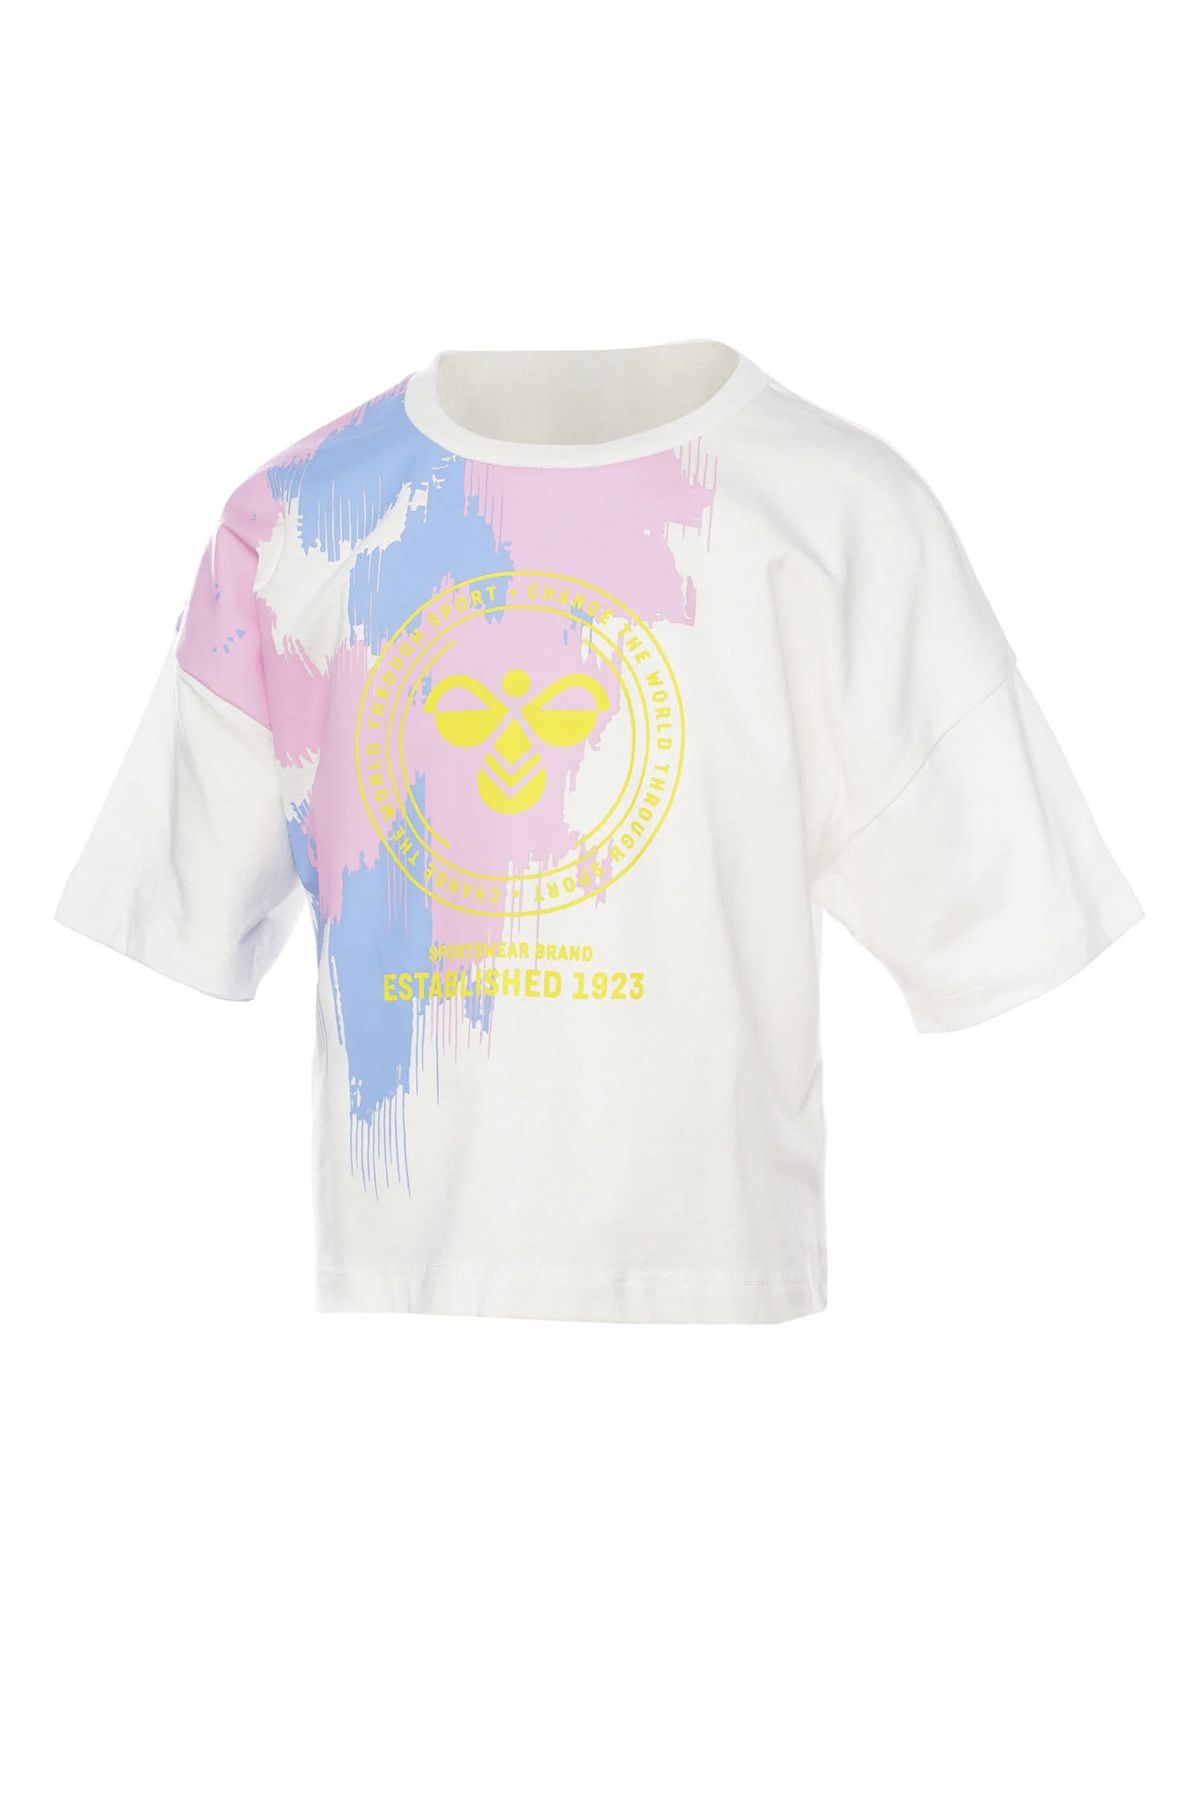 hummel Desenli Beyaz Kız Çocuk T-Shirt 911827-9003-HMLMIN T-SHIRT S/S